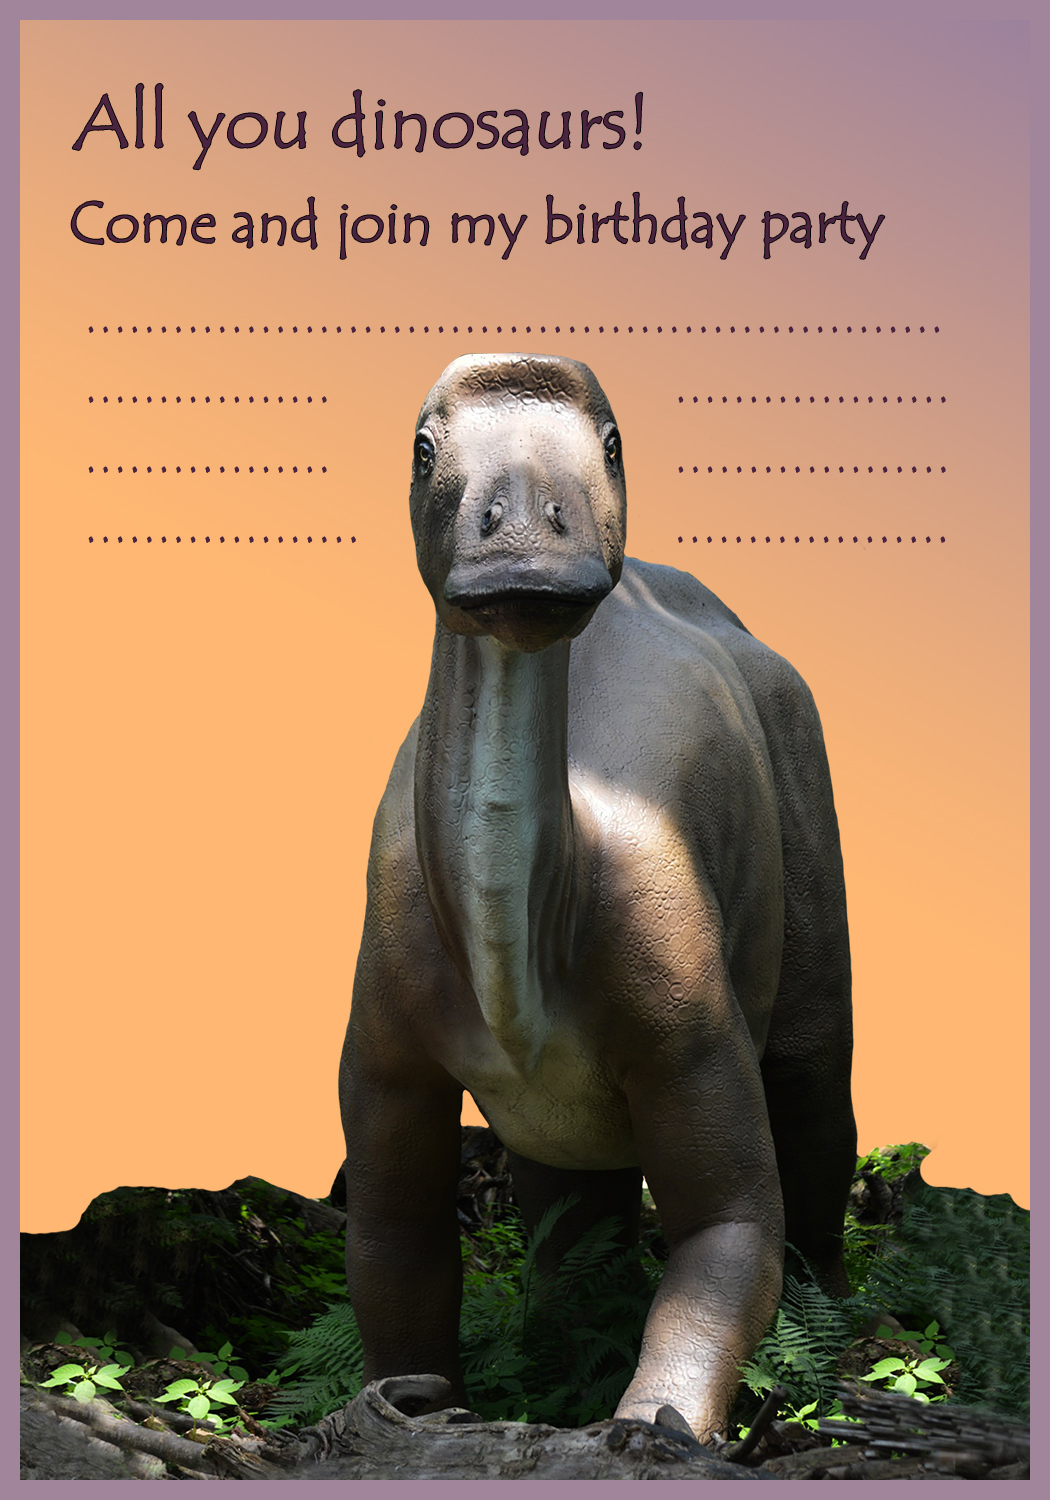 dinosaur birthday party invitation